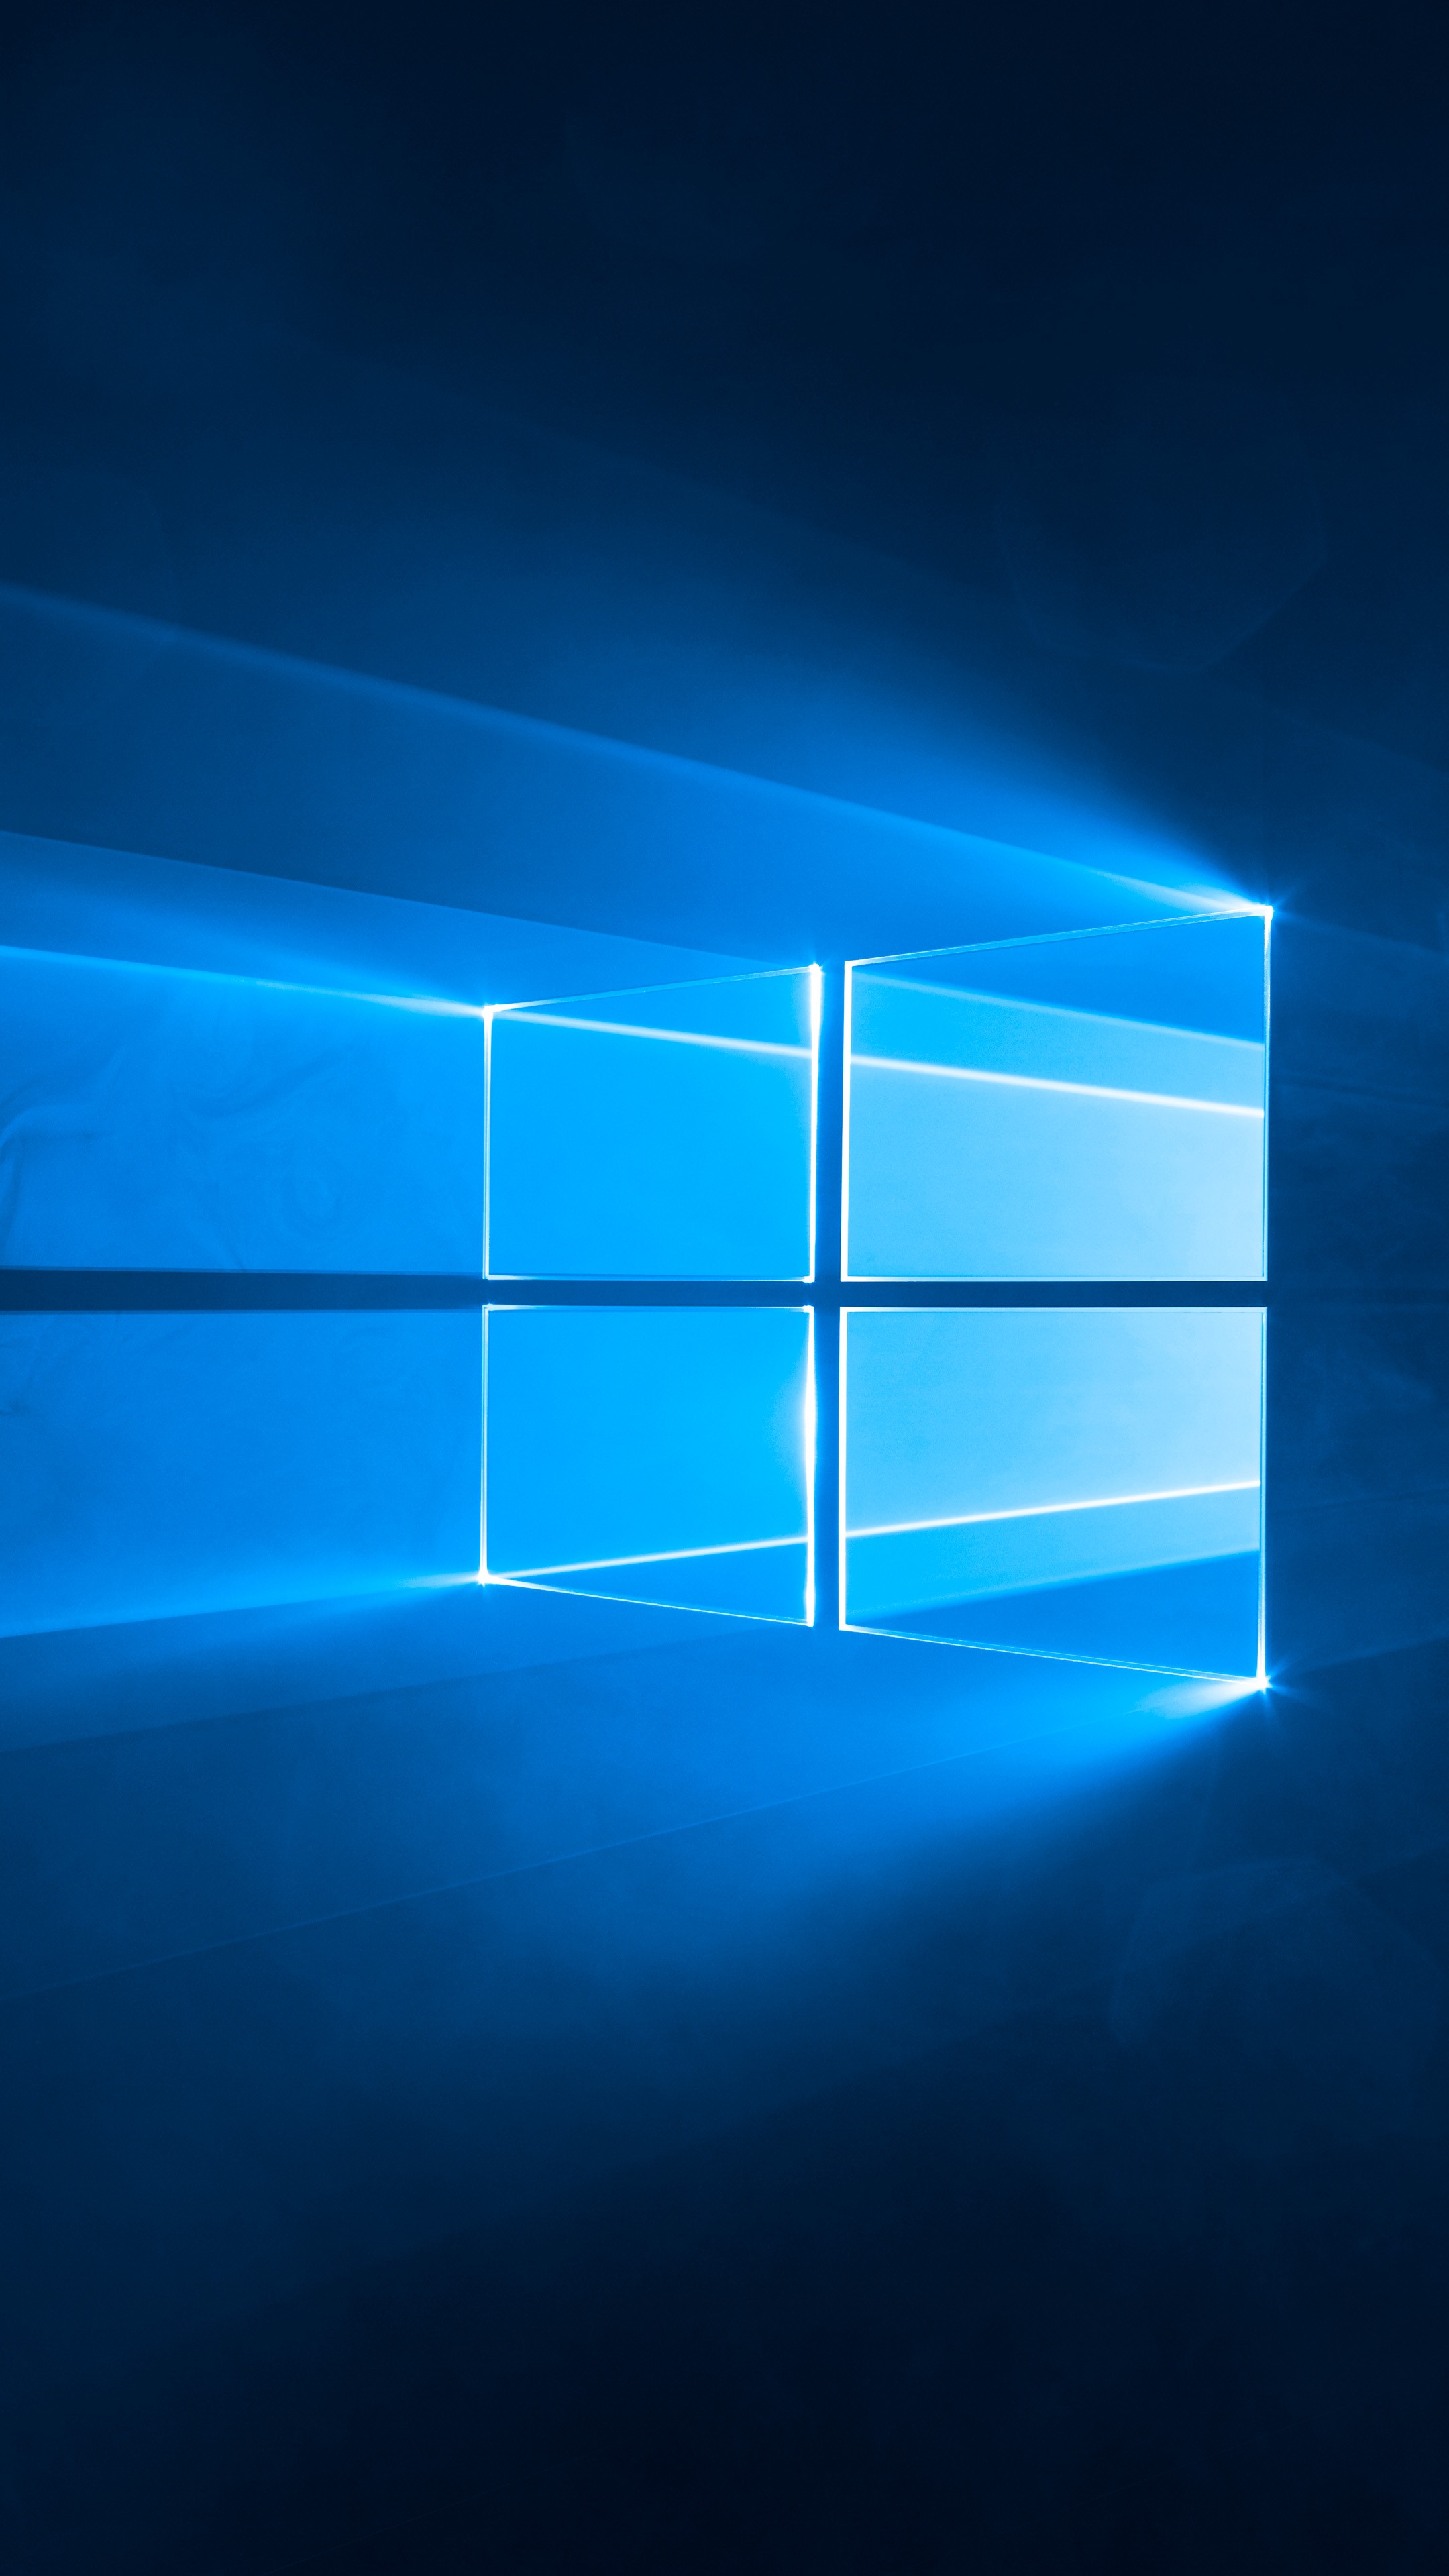 General 2160x3840 Windows 10 operating system Microsoft Windows portrait display logo blue background